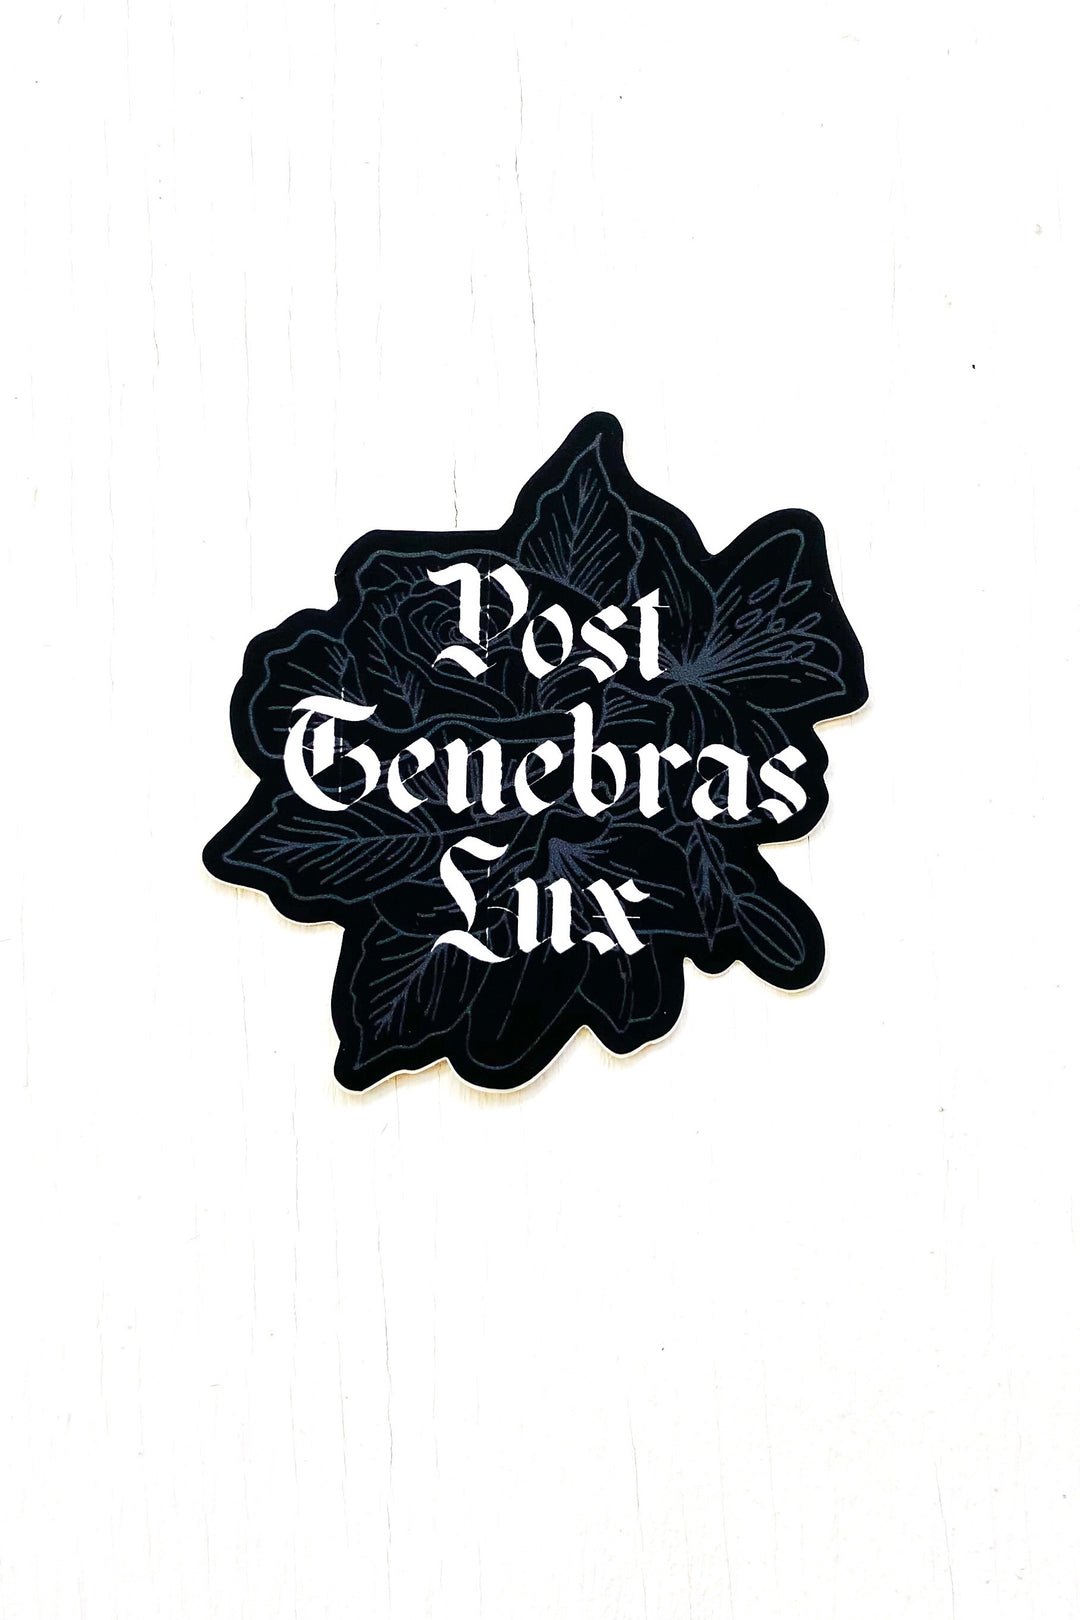 Blackletter/Floral “Post Tenebras Lux” Sticker